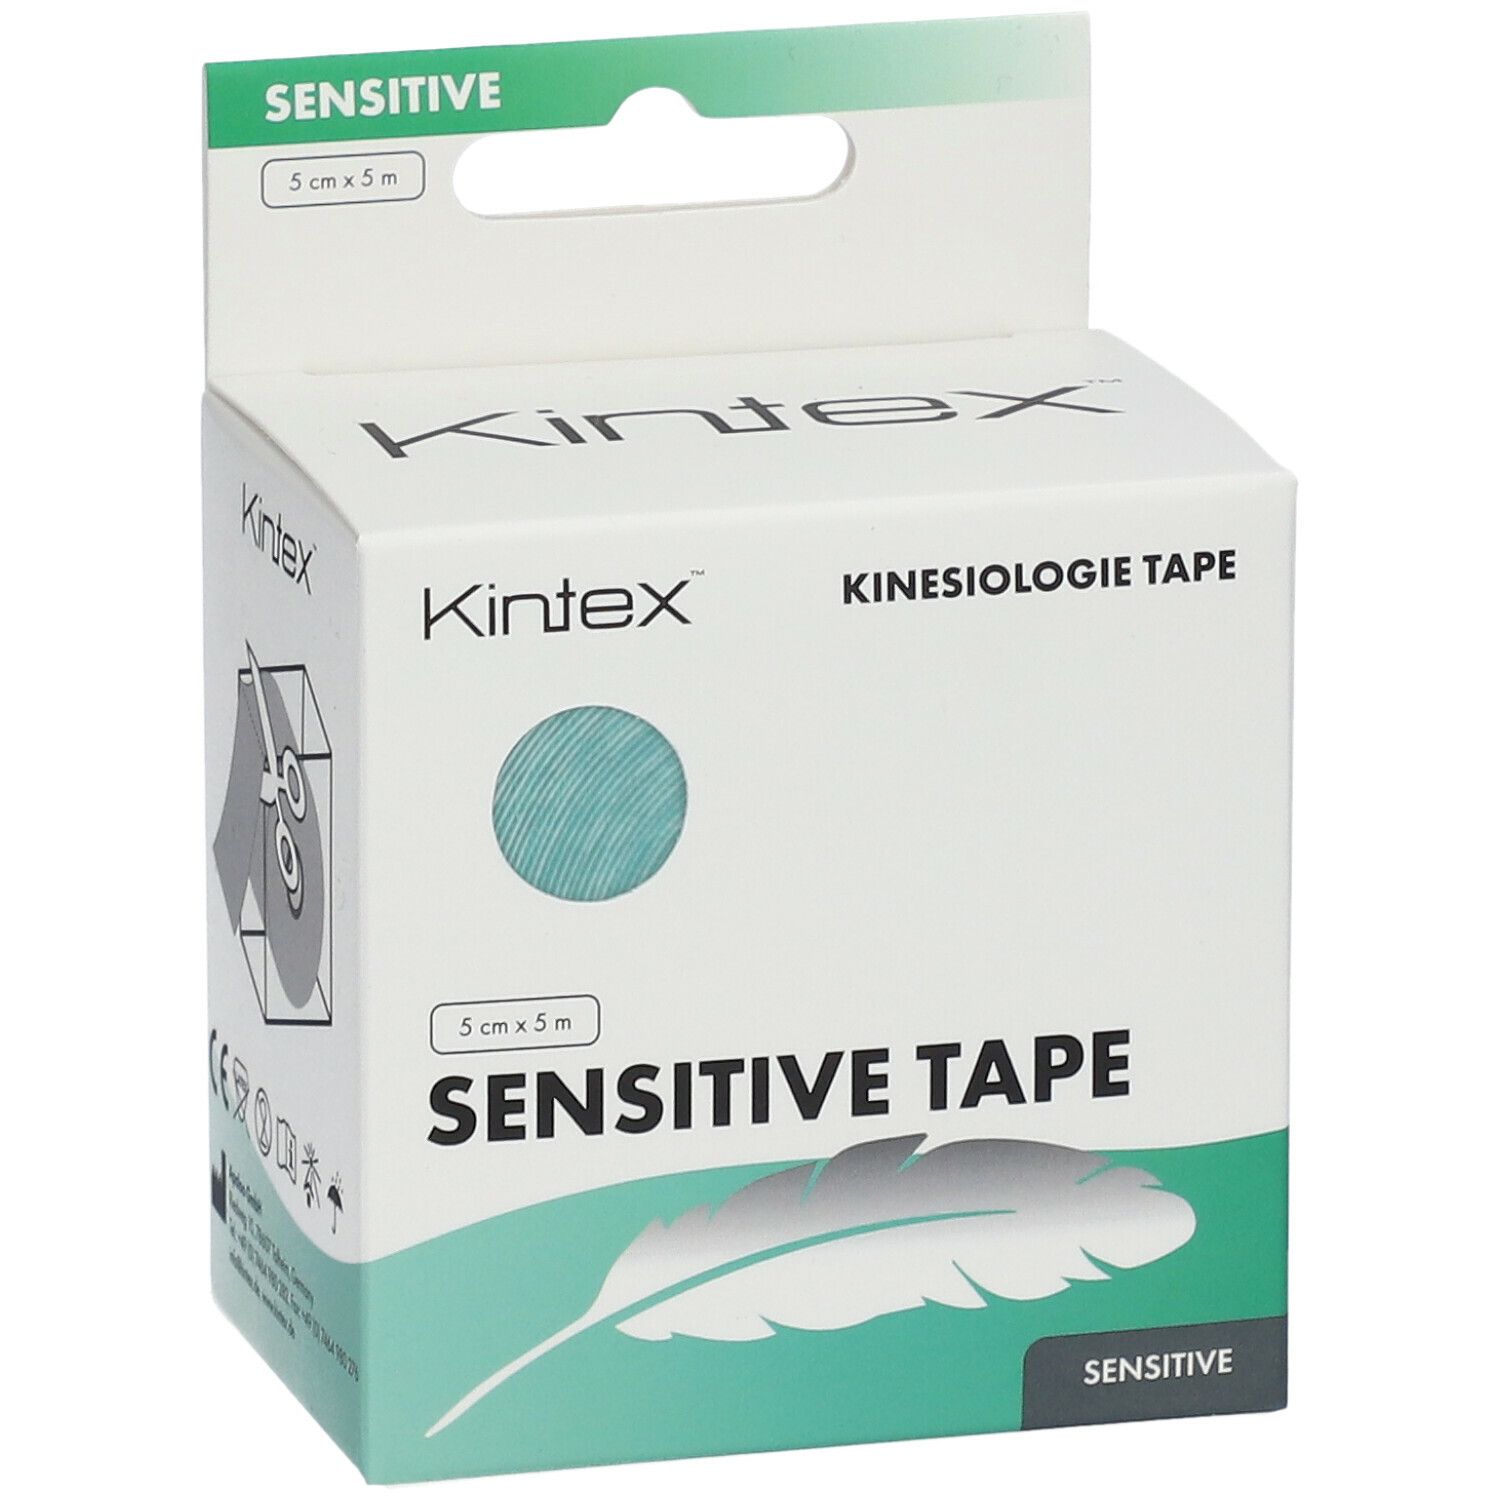 Kintex™ Kinesiology Tape Sensitive 5 APOTHEKE - SHOP St 1 5 cm x